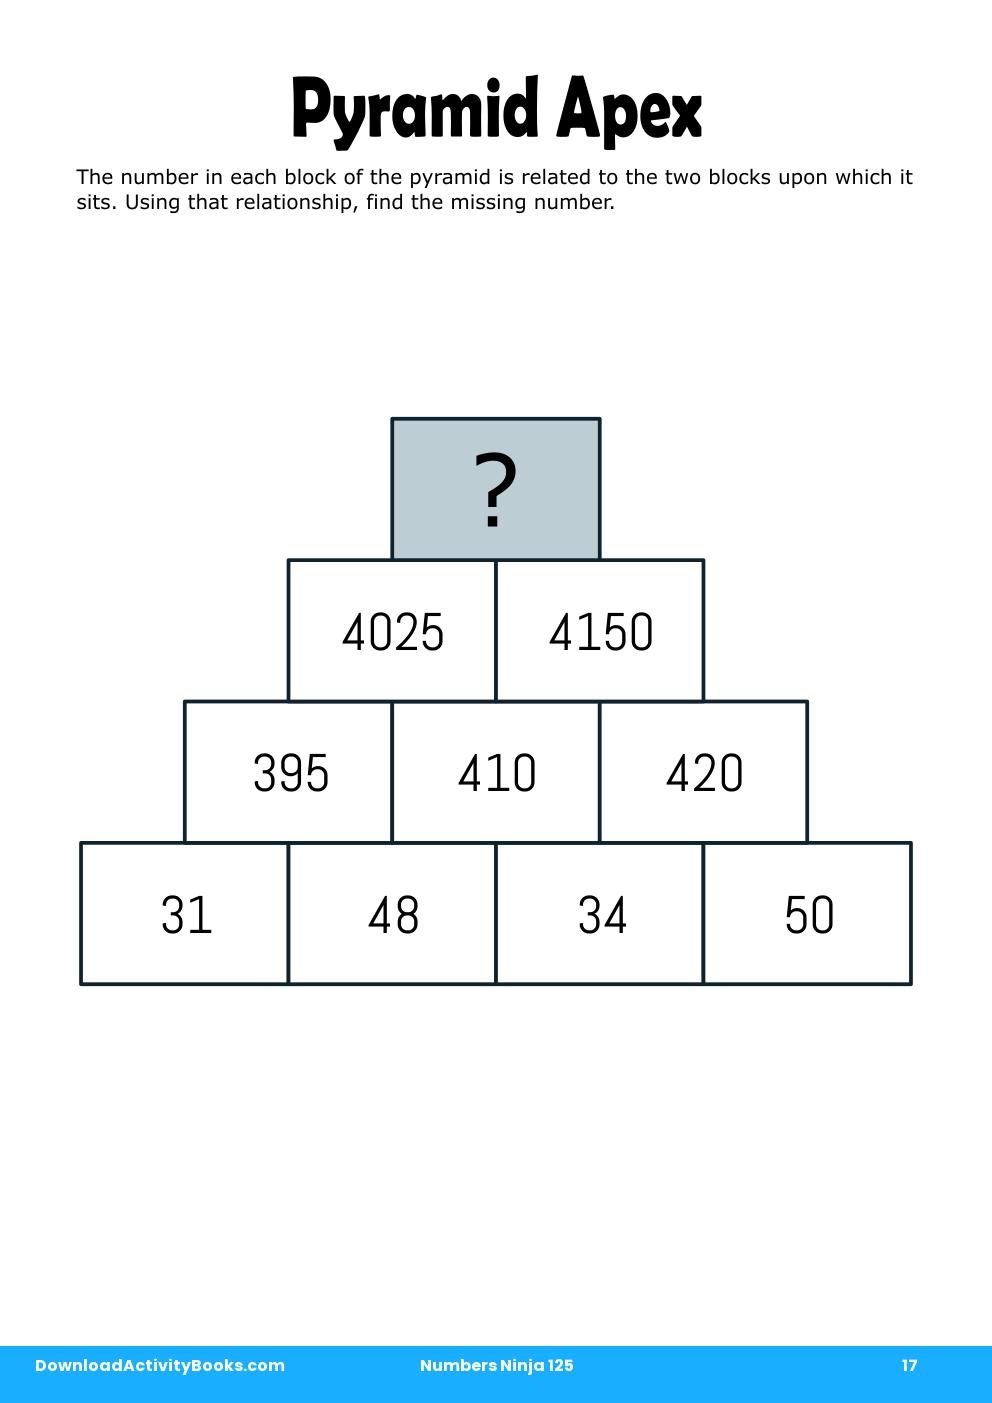 Pyramid Apex in Numbers Ninja 125